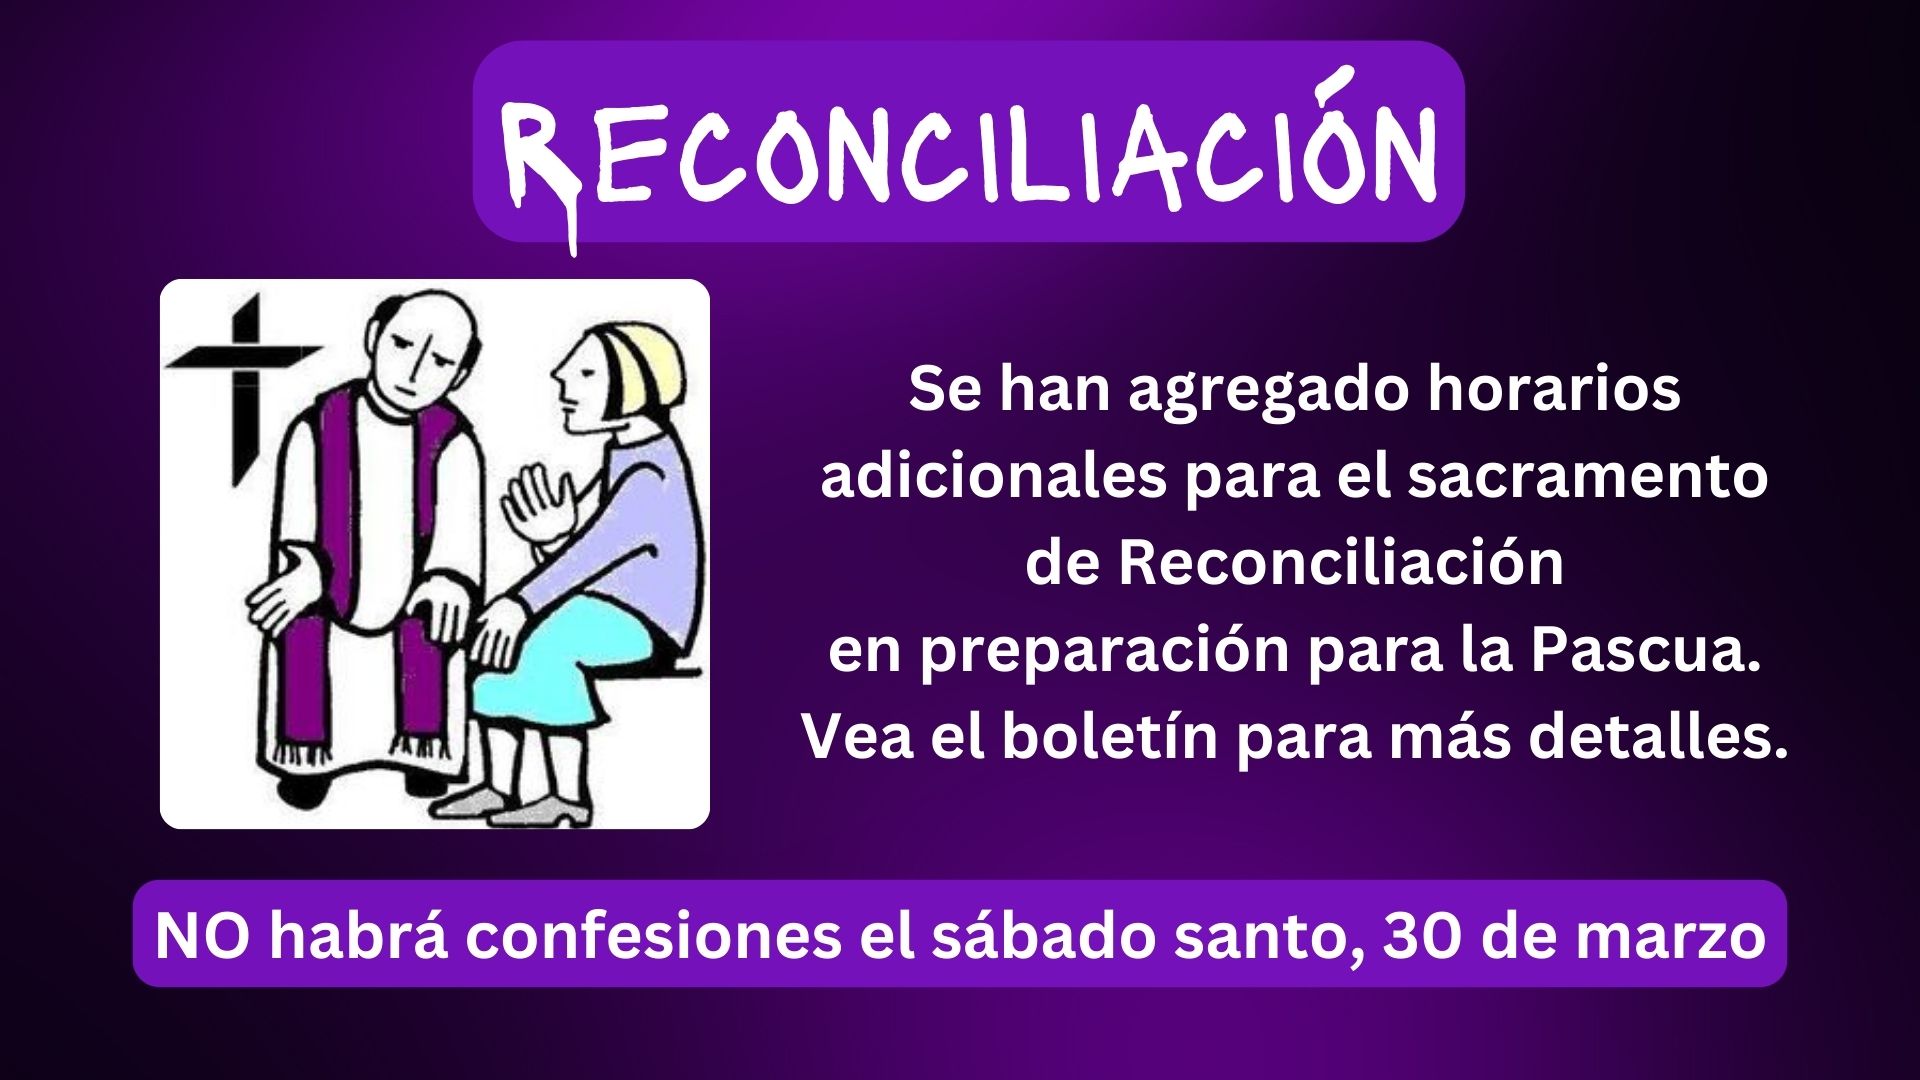 Reconciliation - Church Spanish